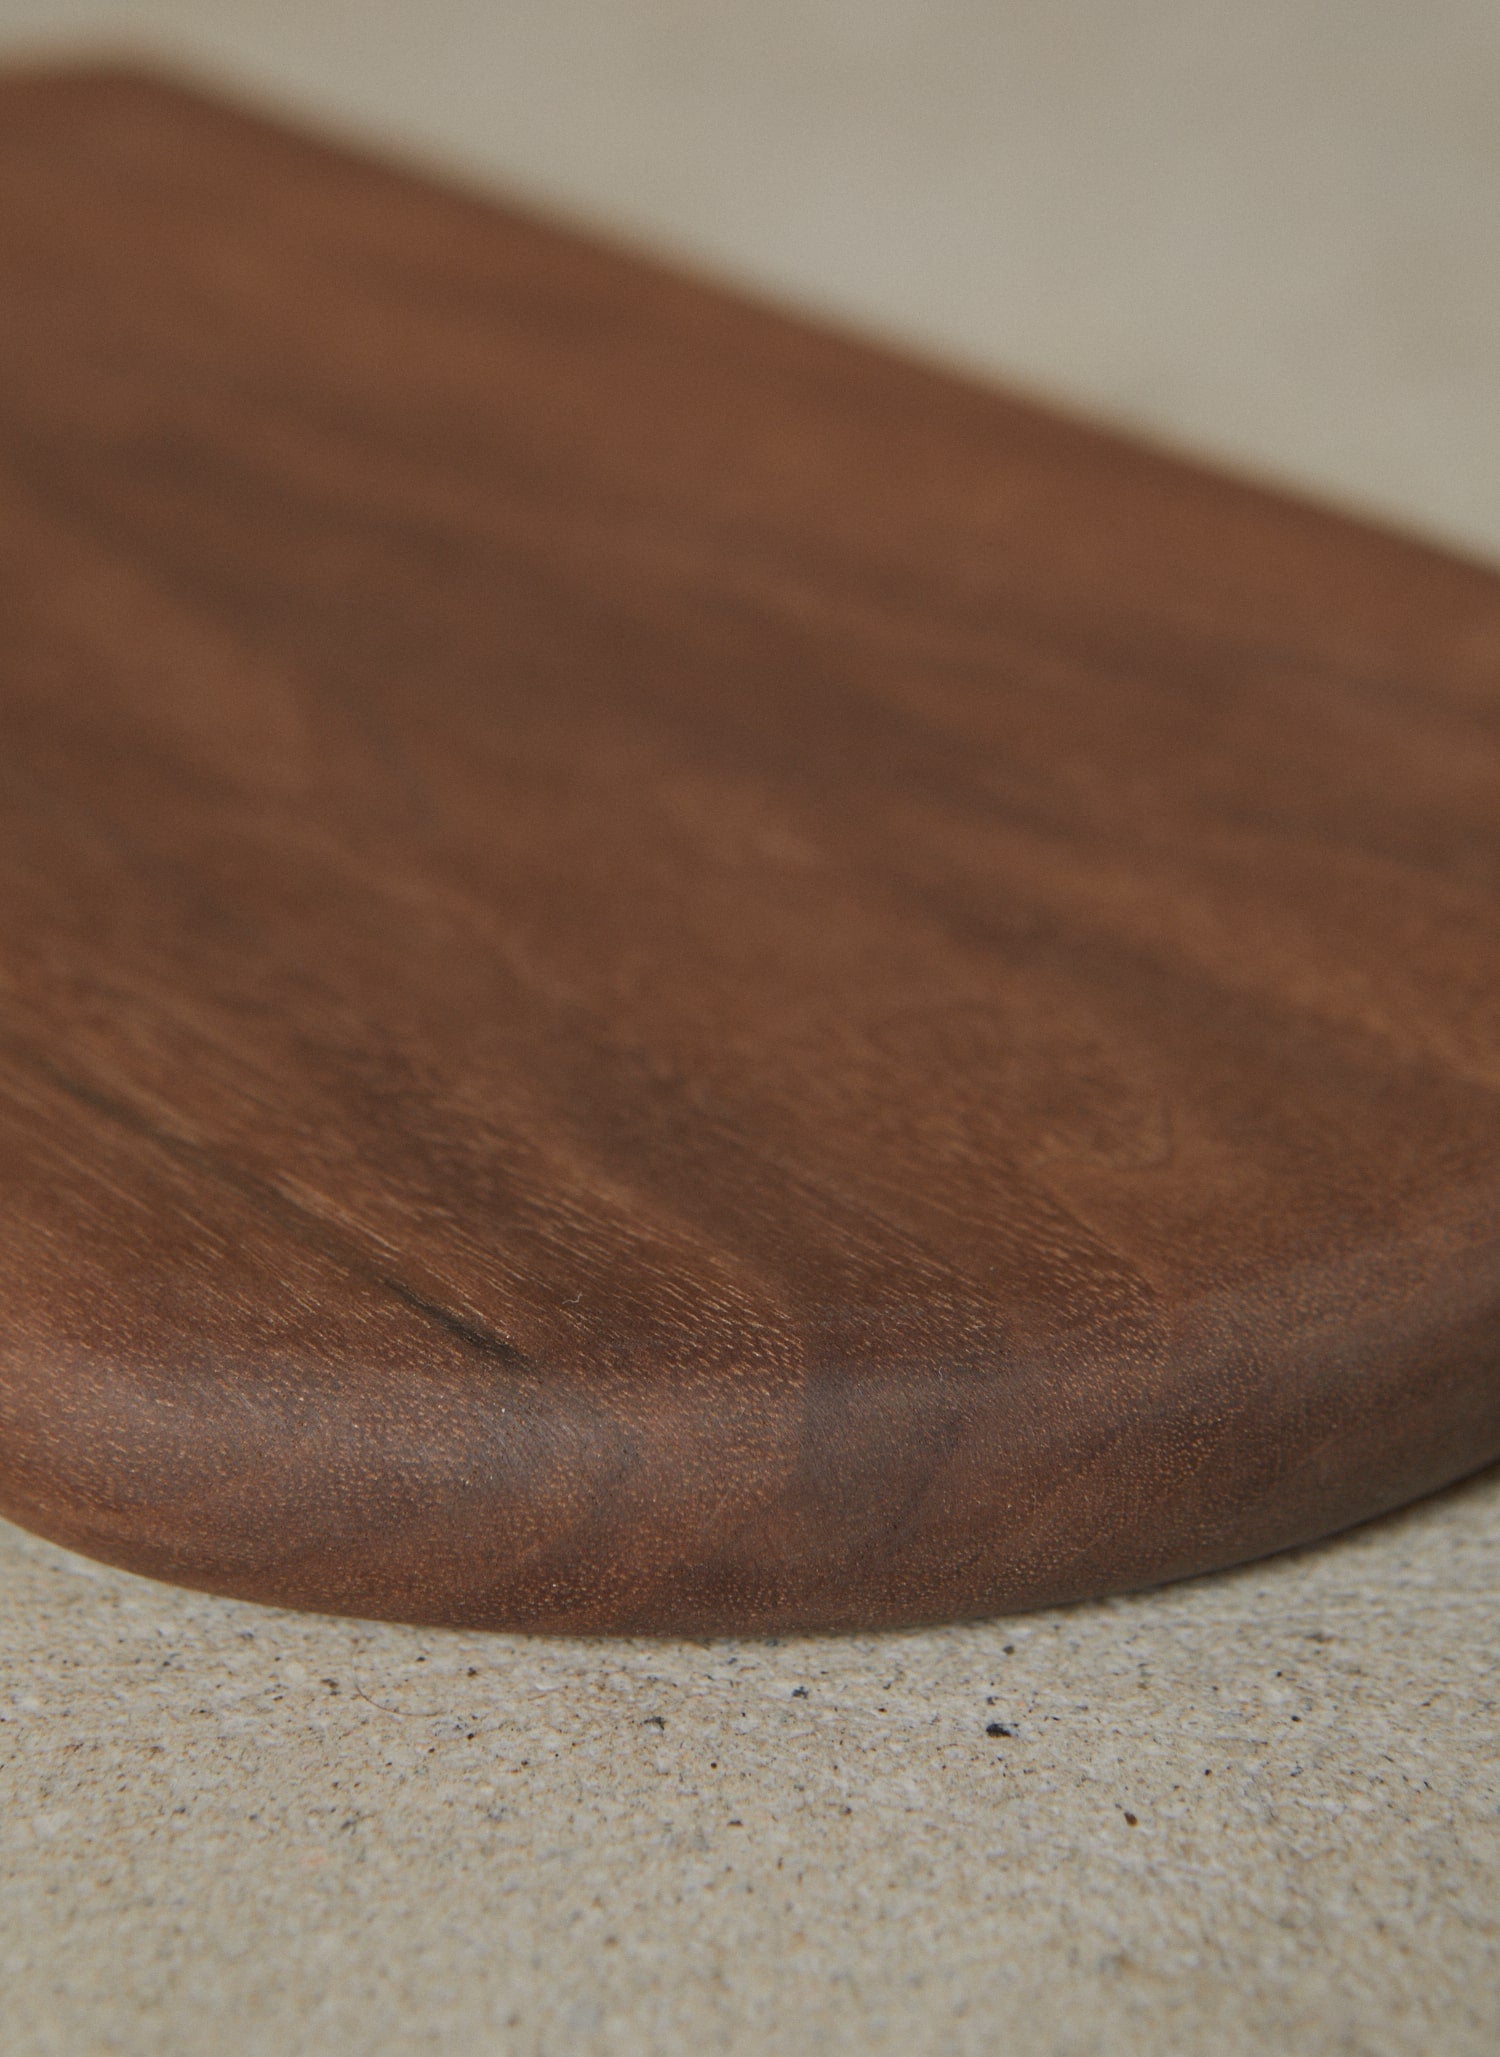 Carved edge detail on Walnut Shortboard.